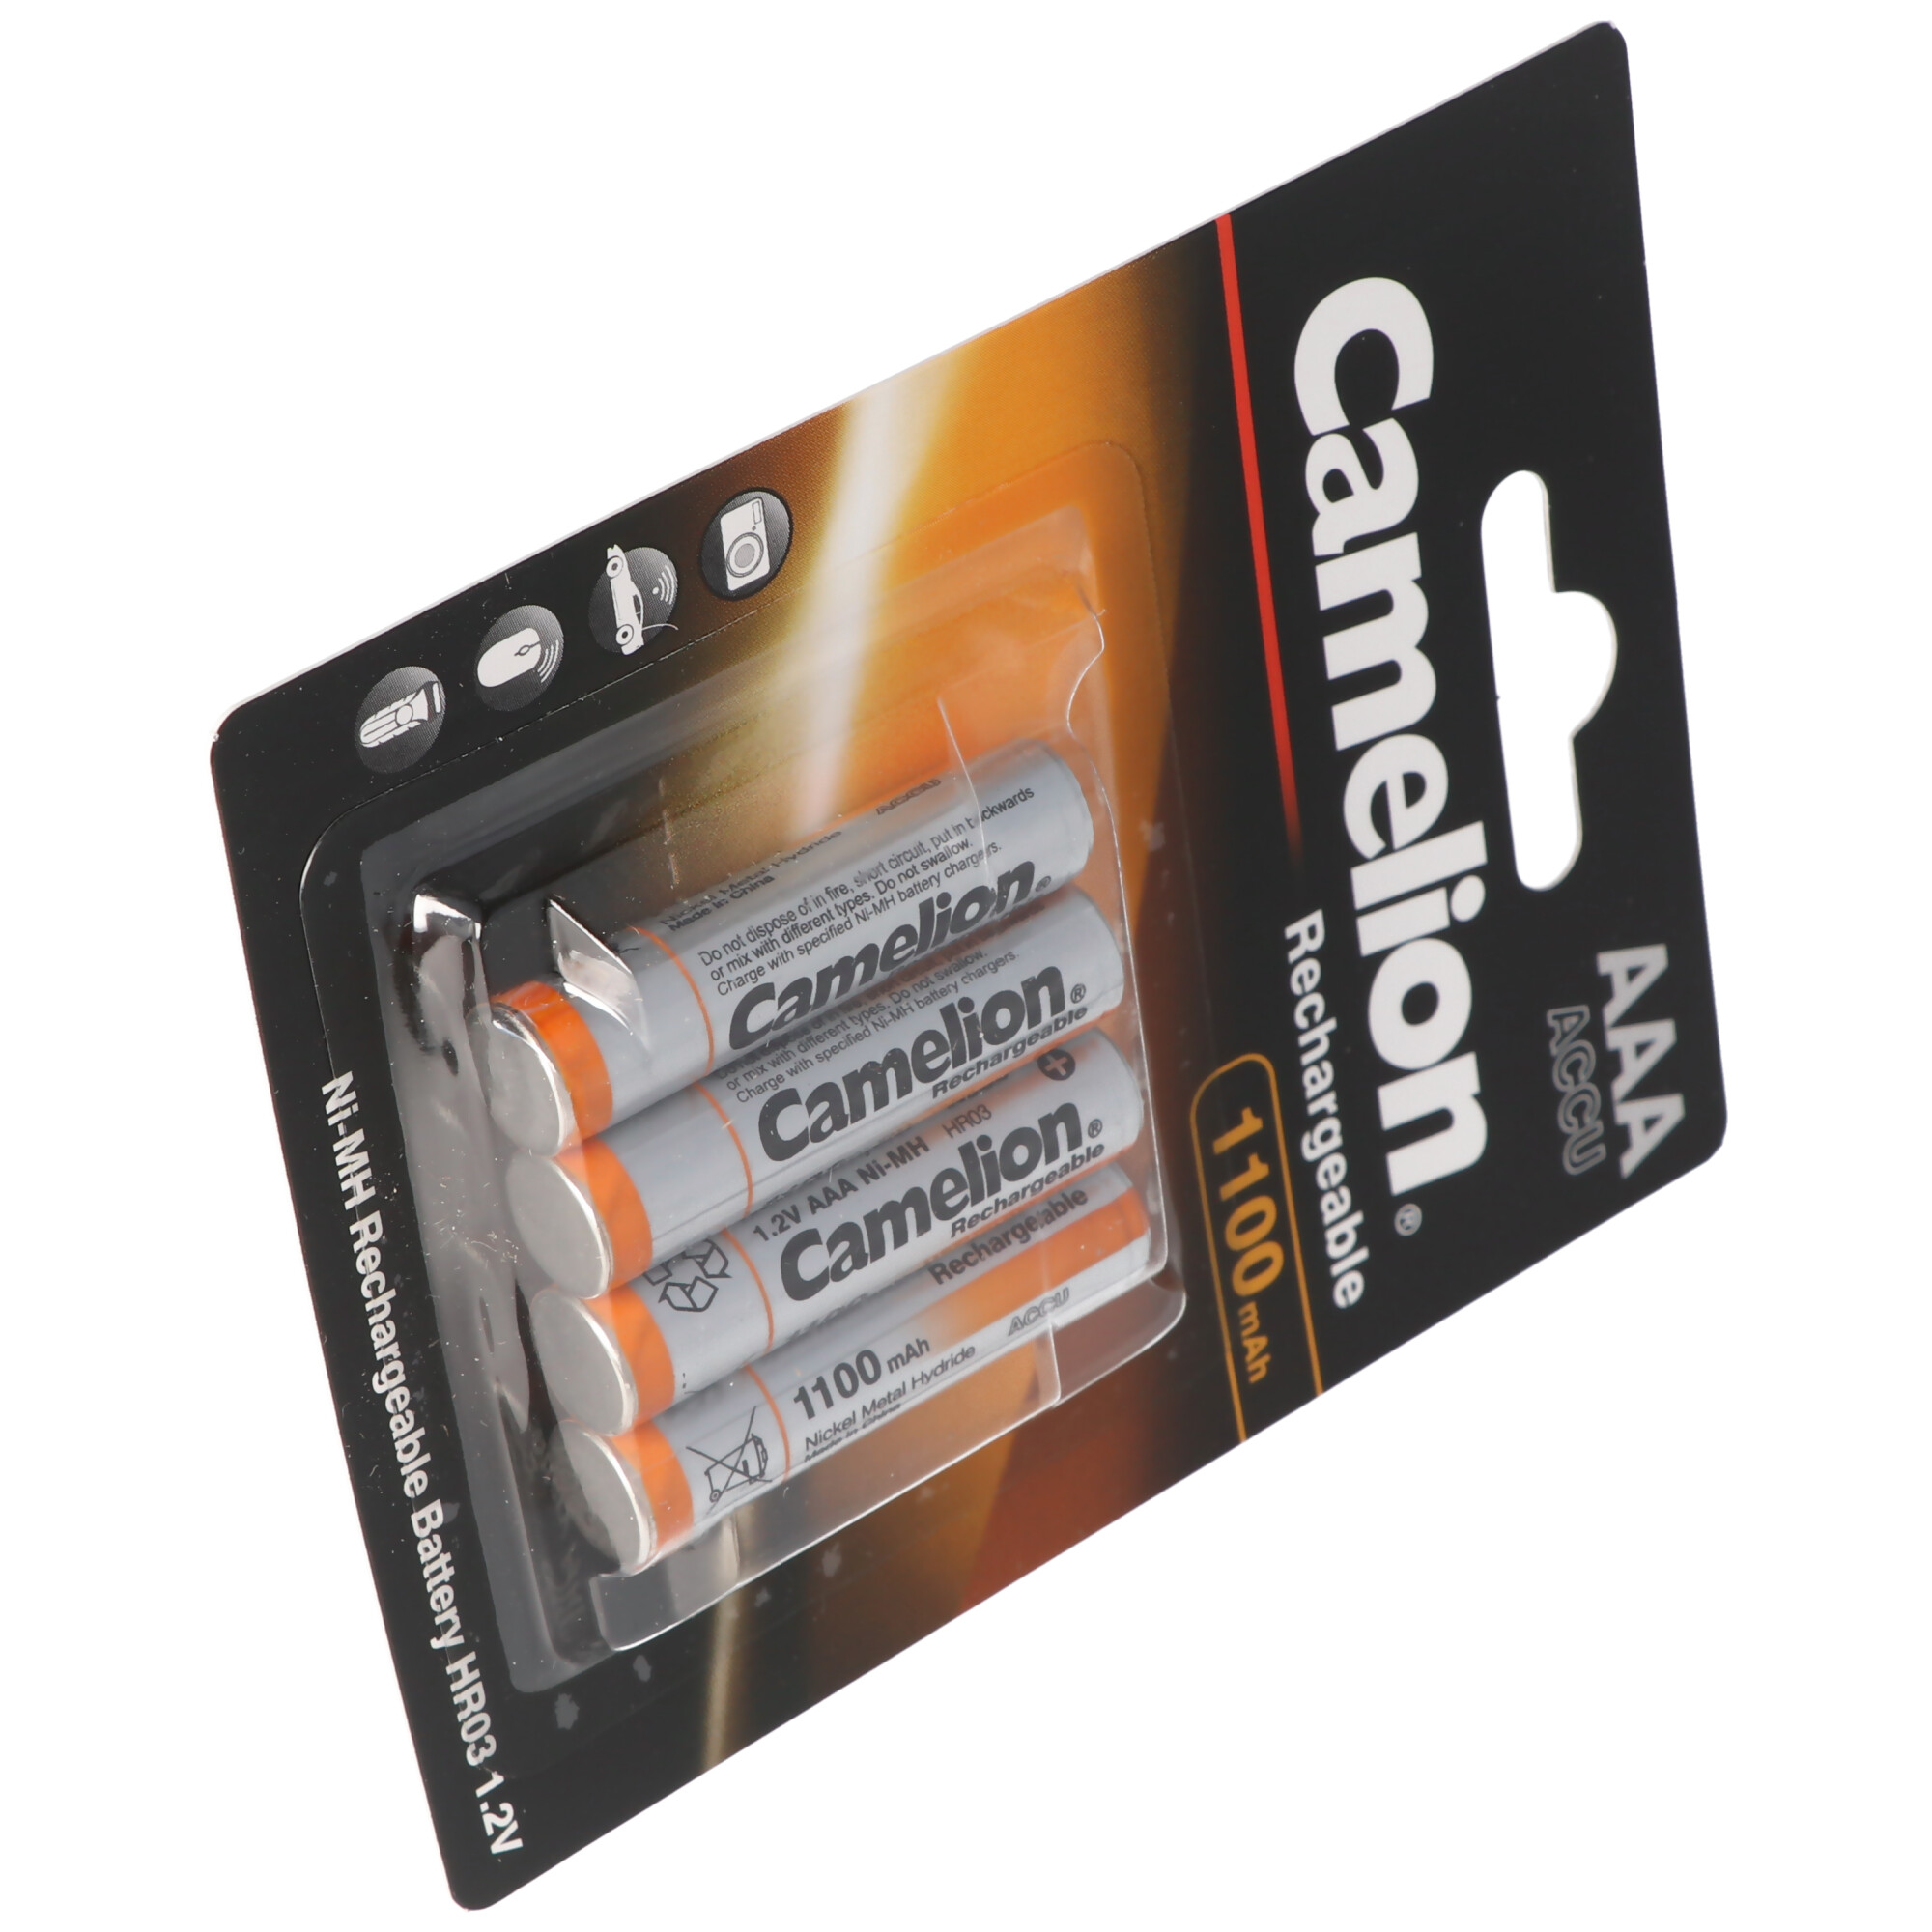 CAMELION Akku Micro Ah NiMH, Blister) Volt, 1.1 1.2 AAA 1100mAh Batterie, (4er NiMH NiMH